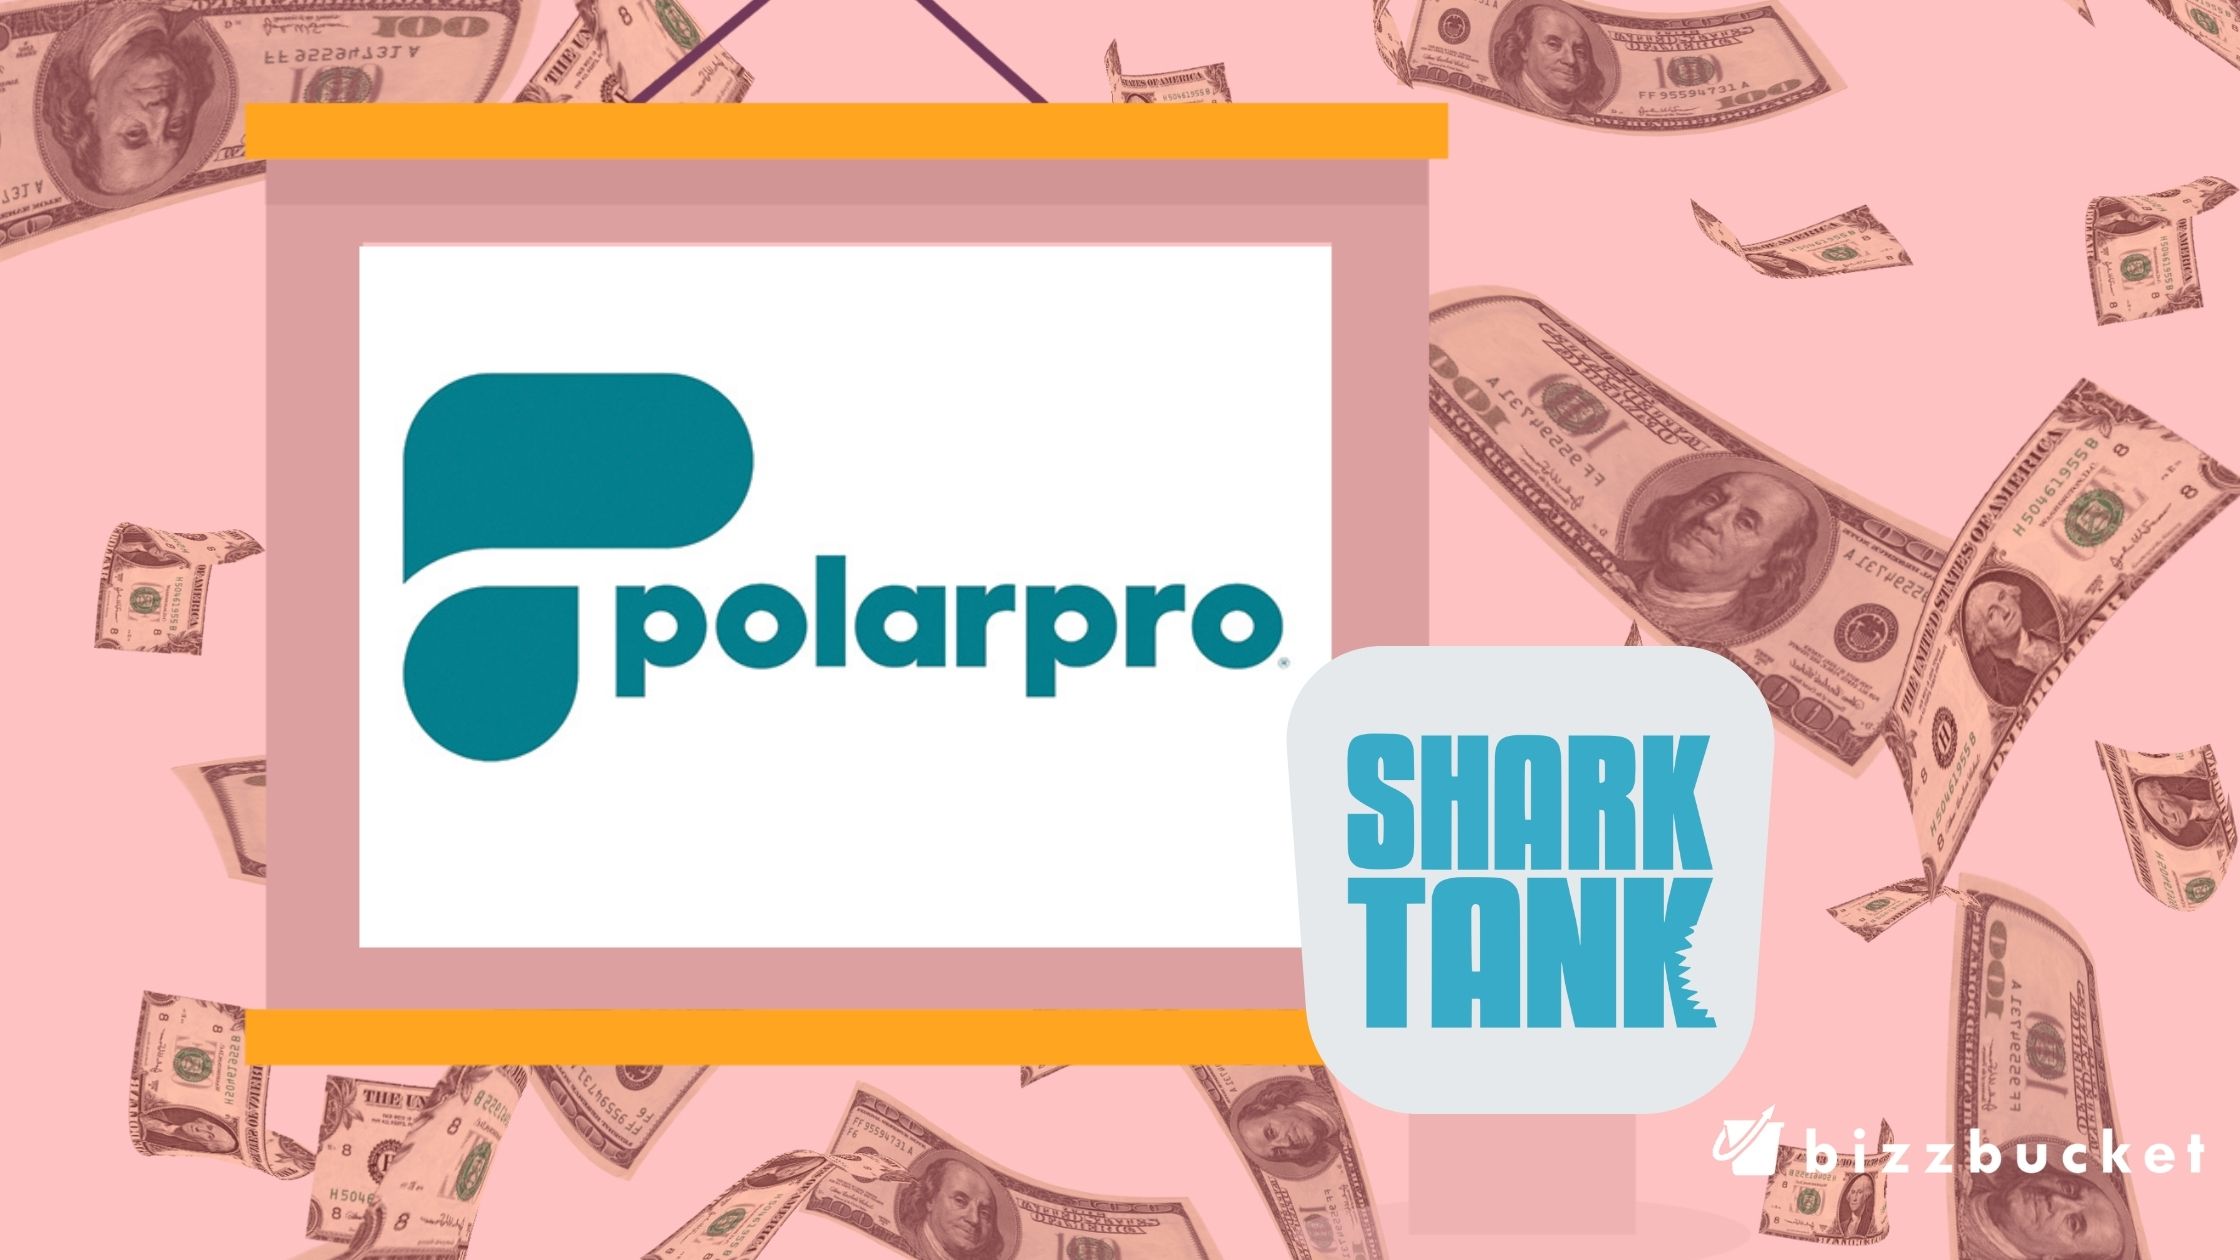 Polar Pro shark tank update